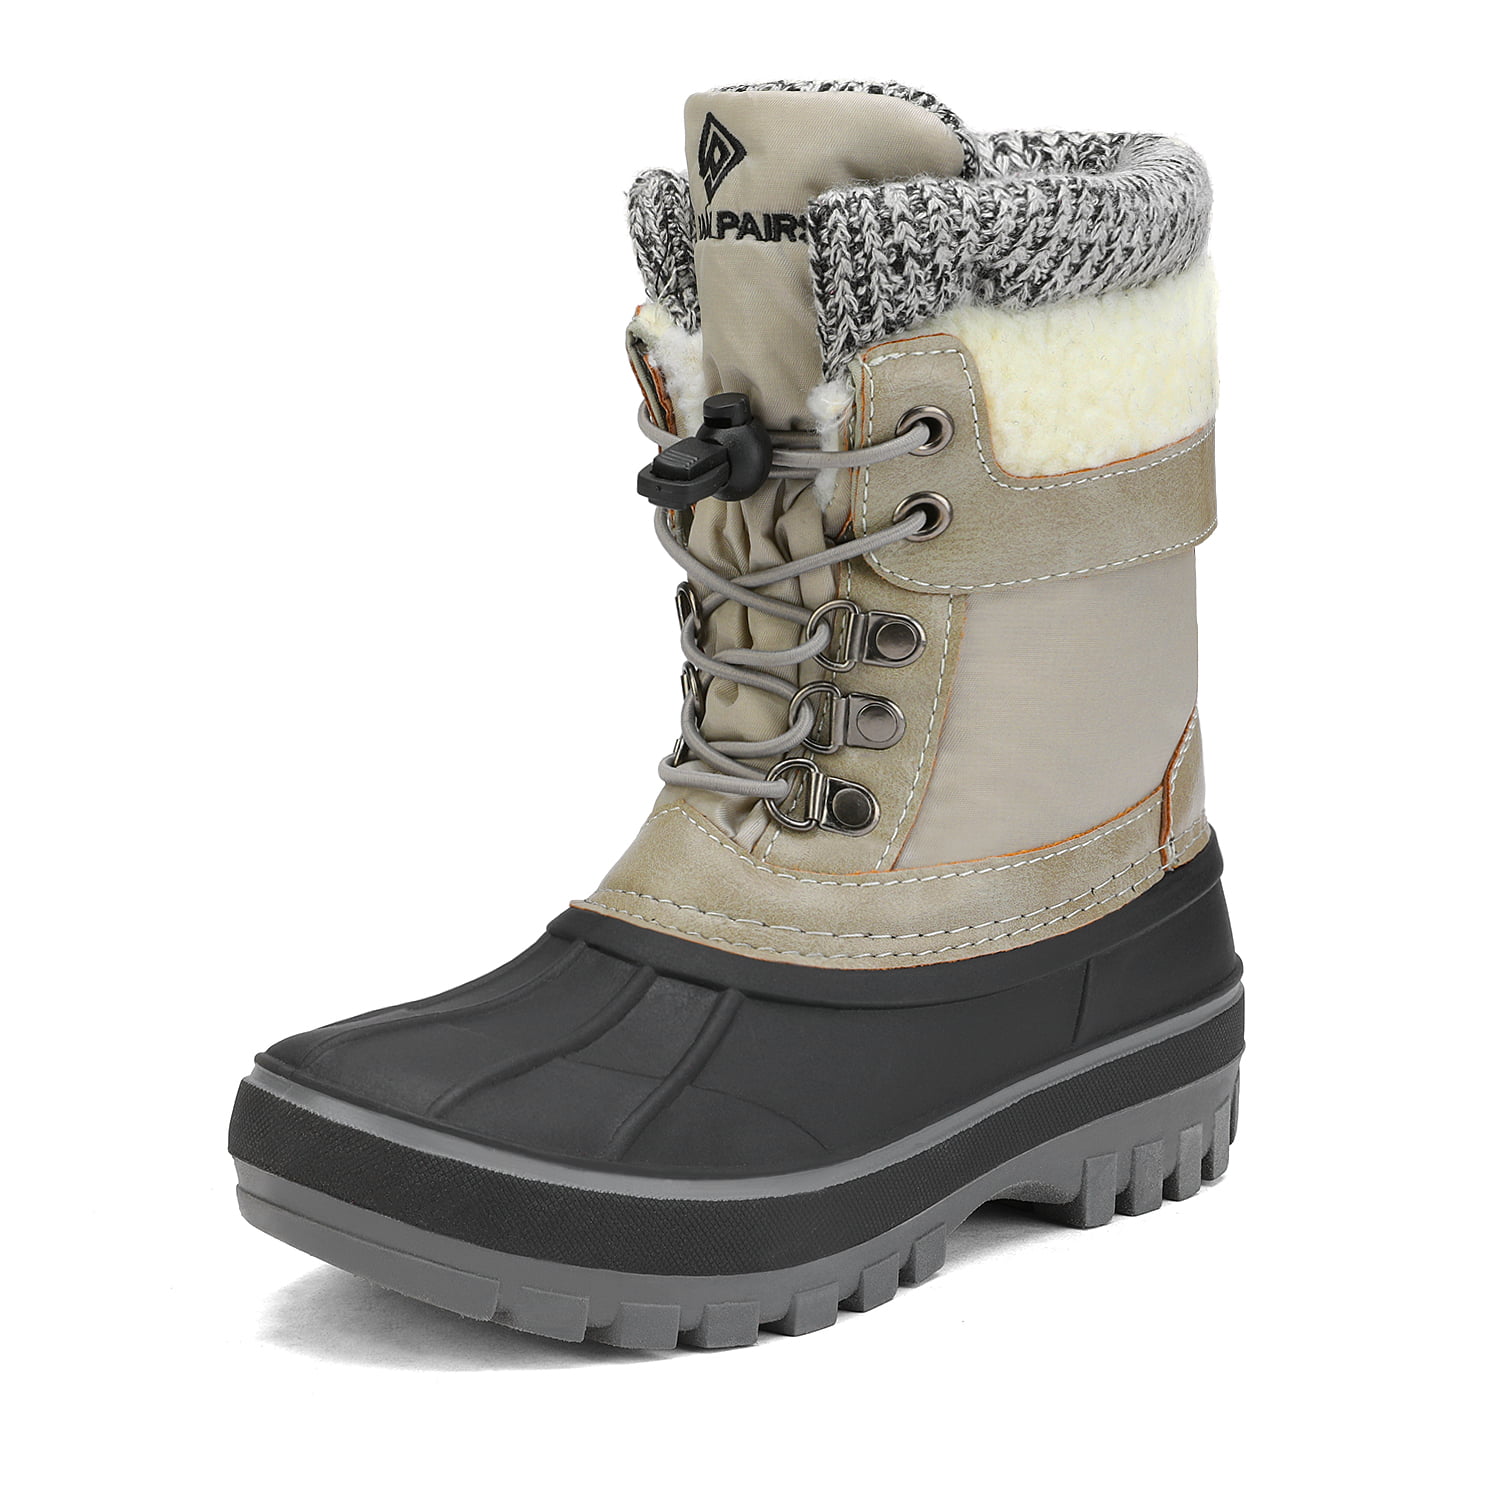 kids snow boots size 9